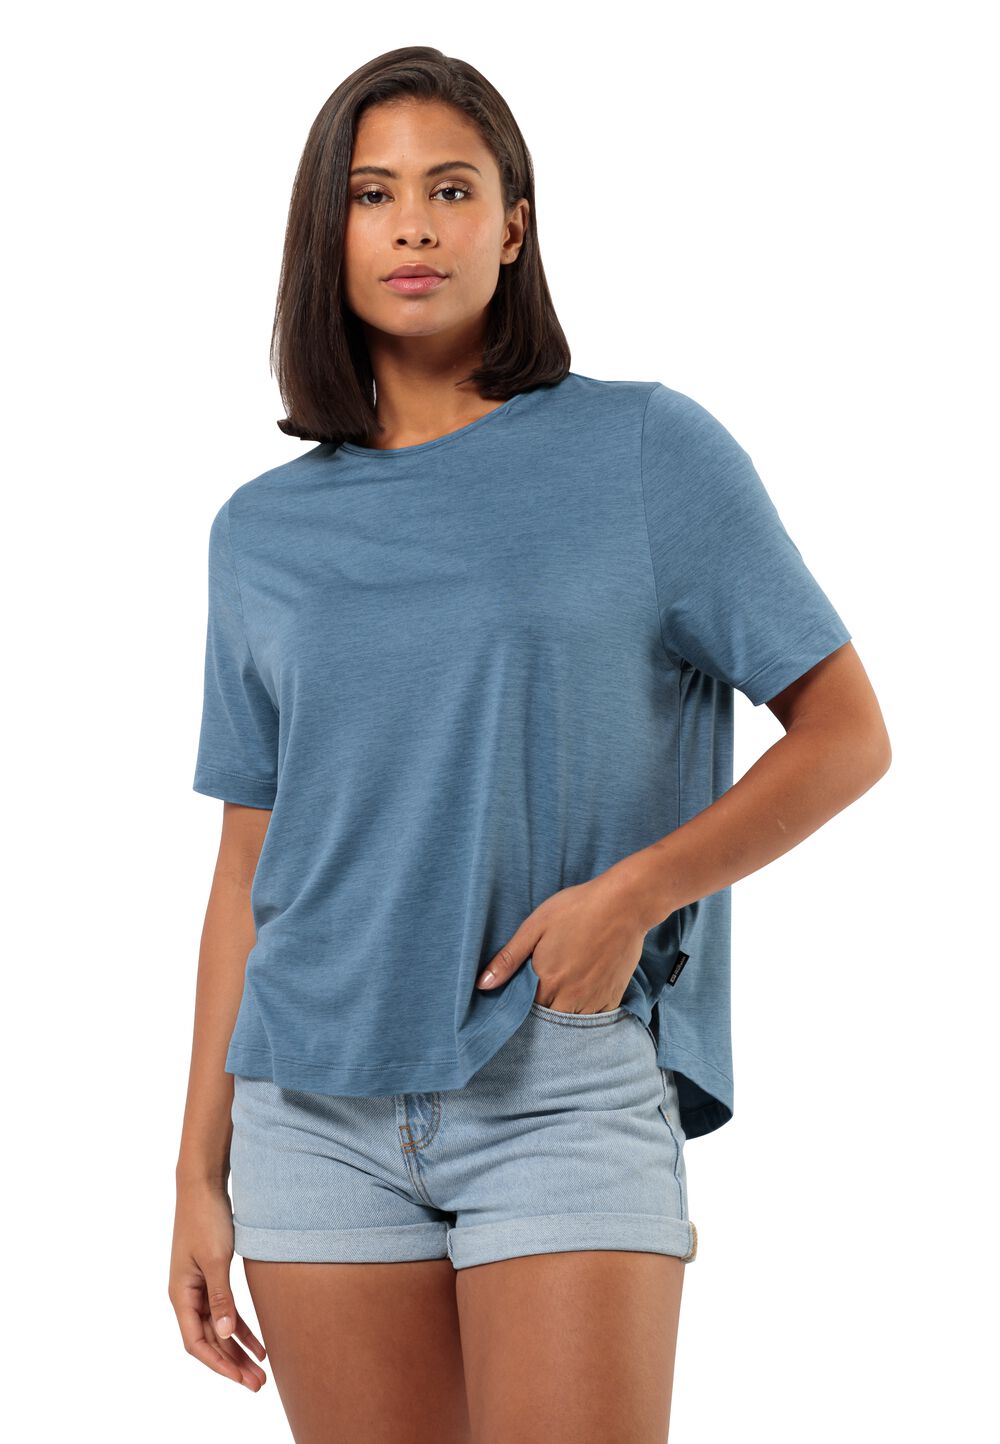 Jack Wolfskin Travel T-Shirt Women Functioneel shirt Dames S elemental blue elemental blue